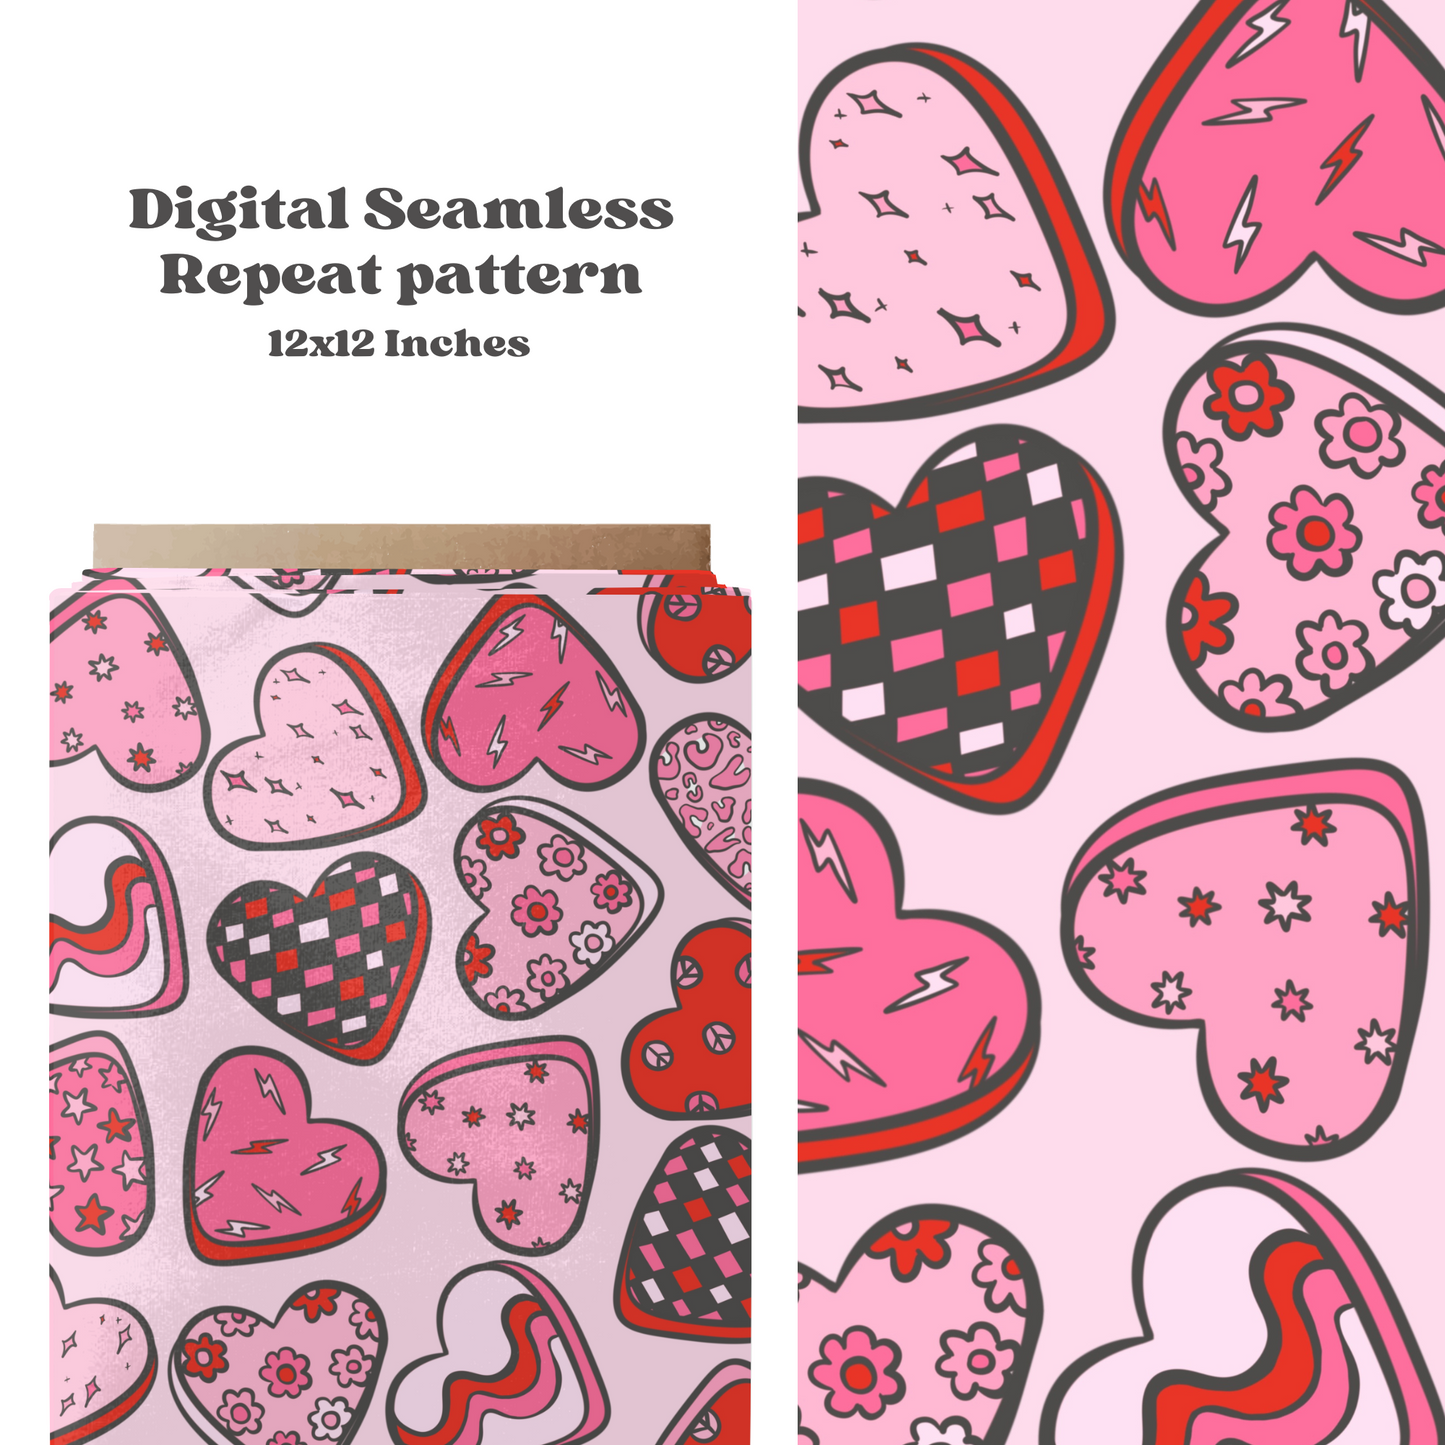 Trendy hearts seamless pattern design